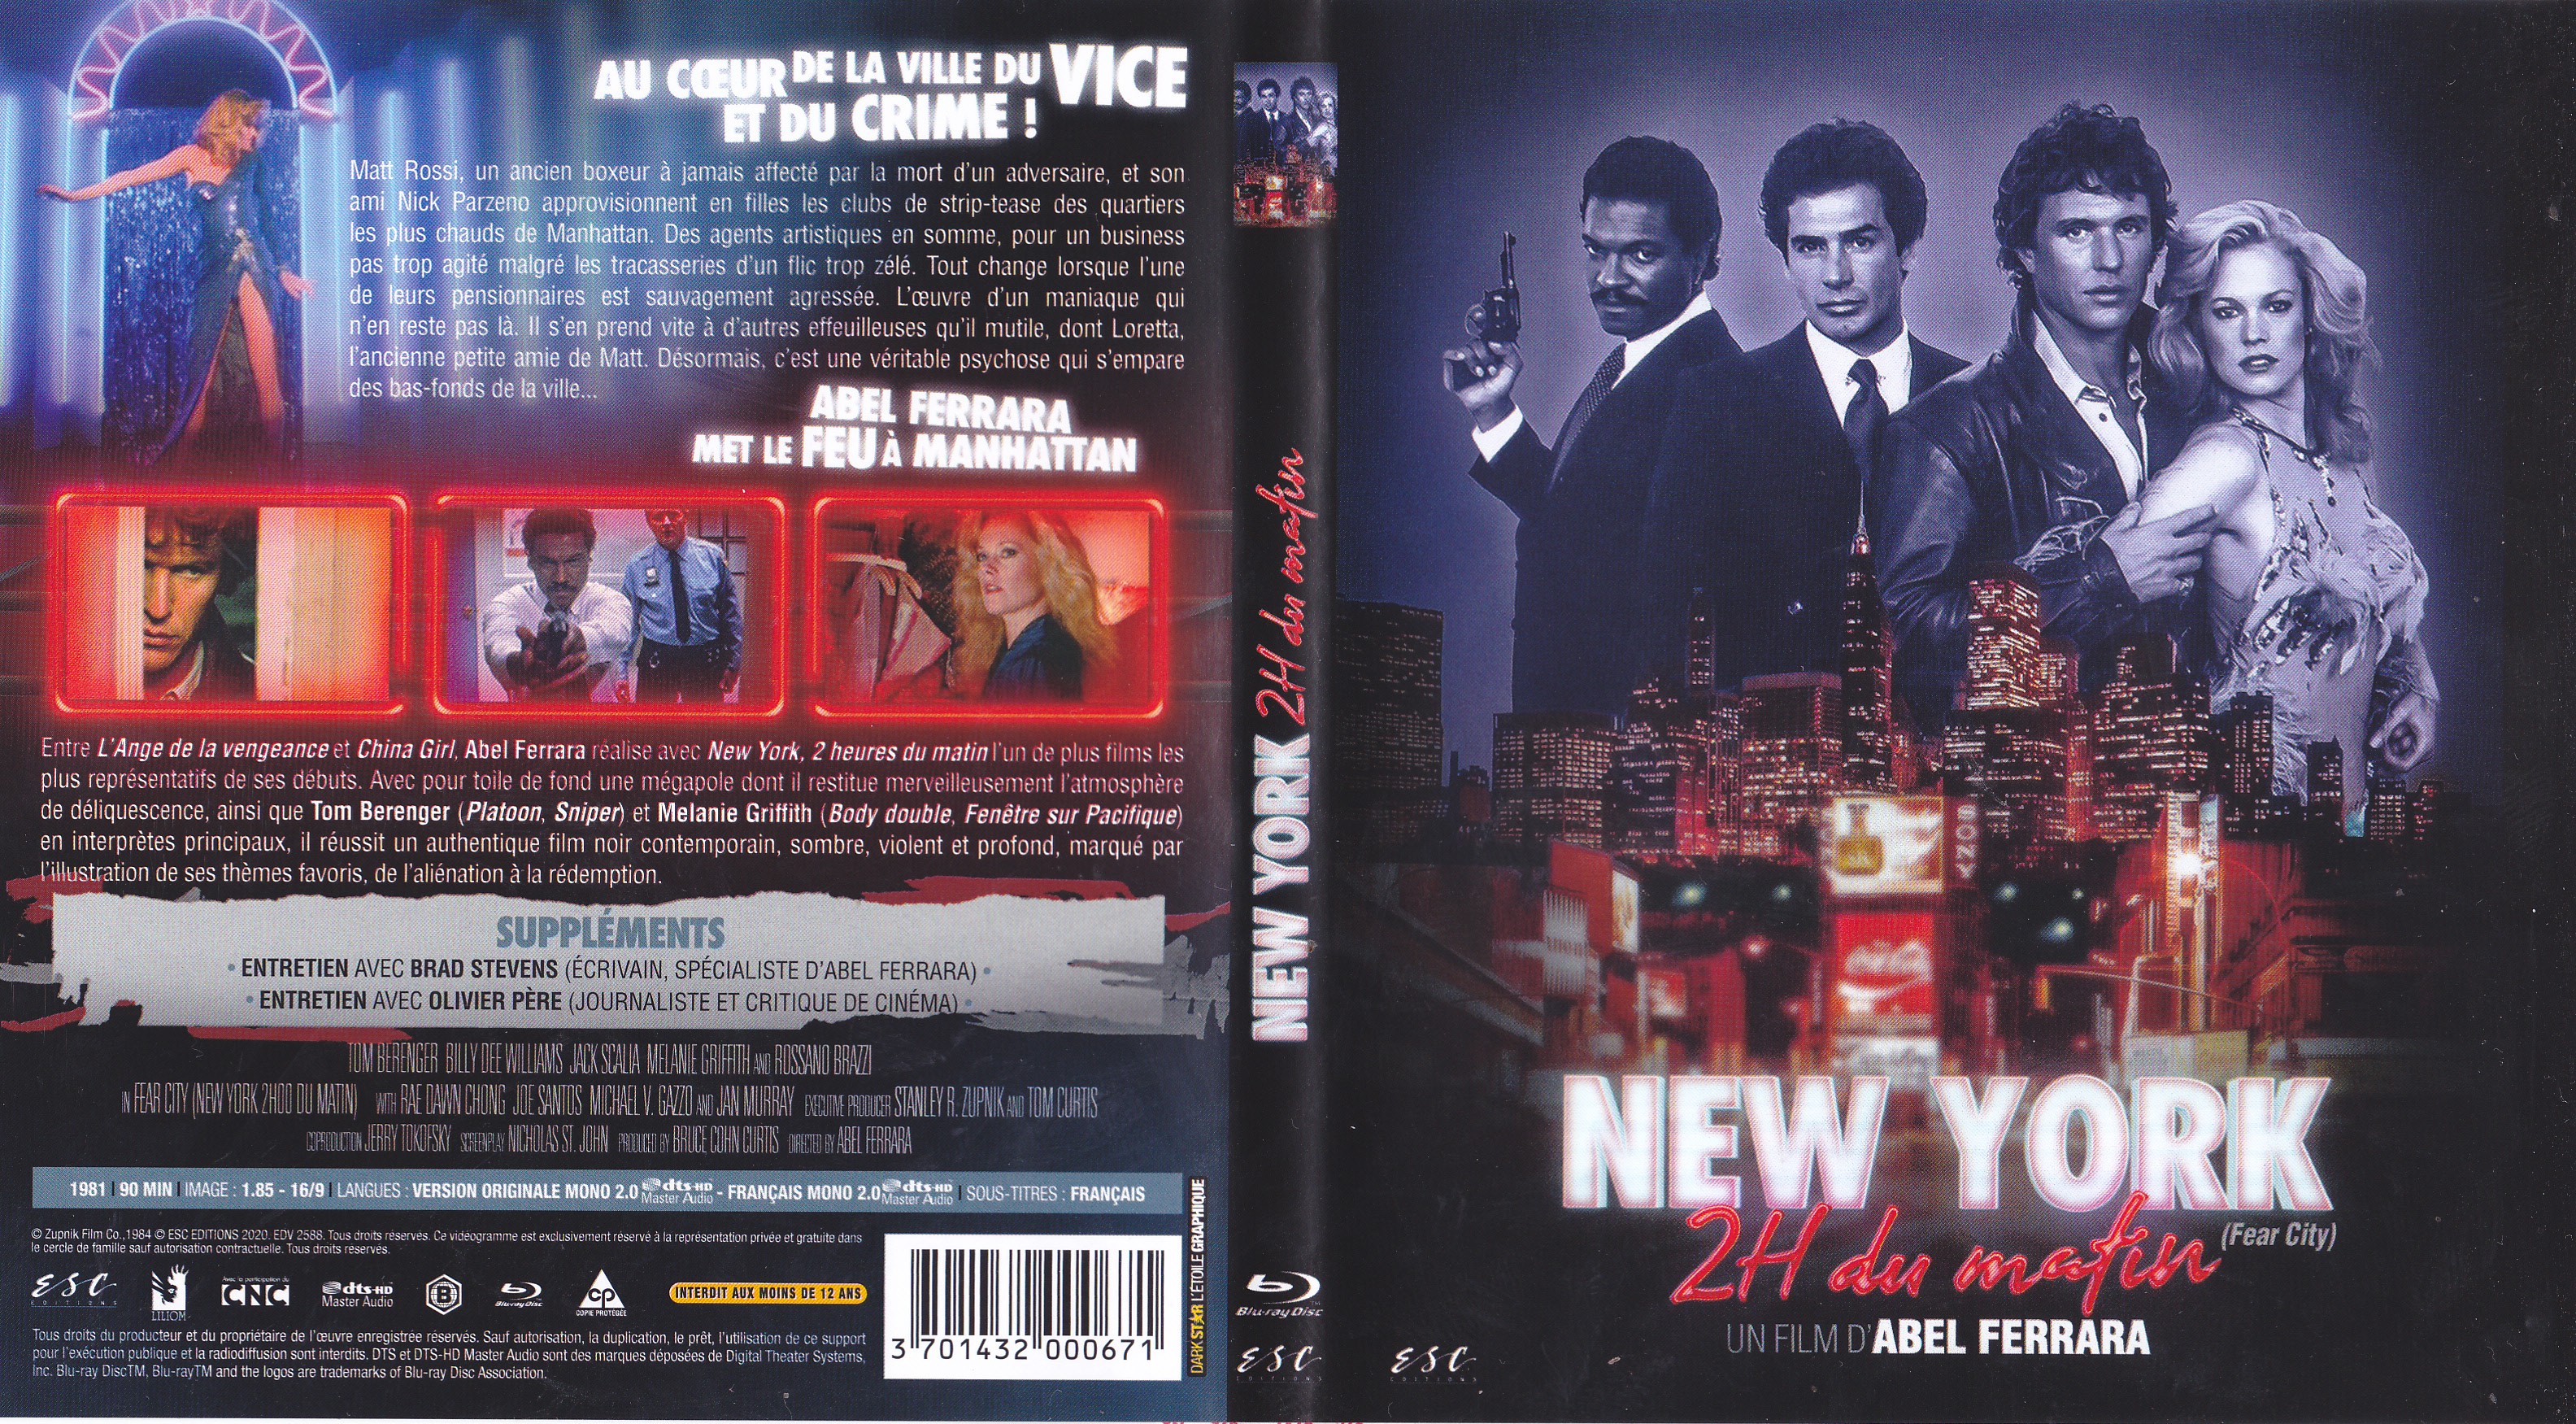 Jaquette DVD New York 2 heure du matin (BLU-RAY)